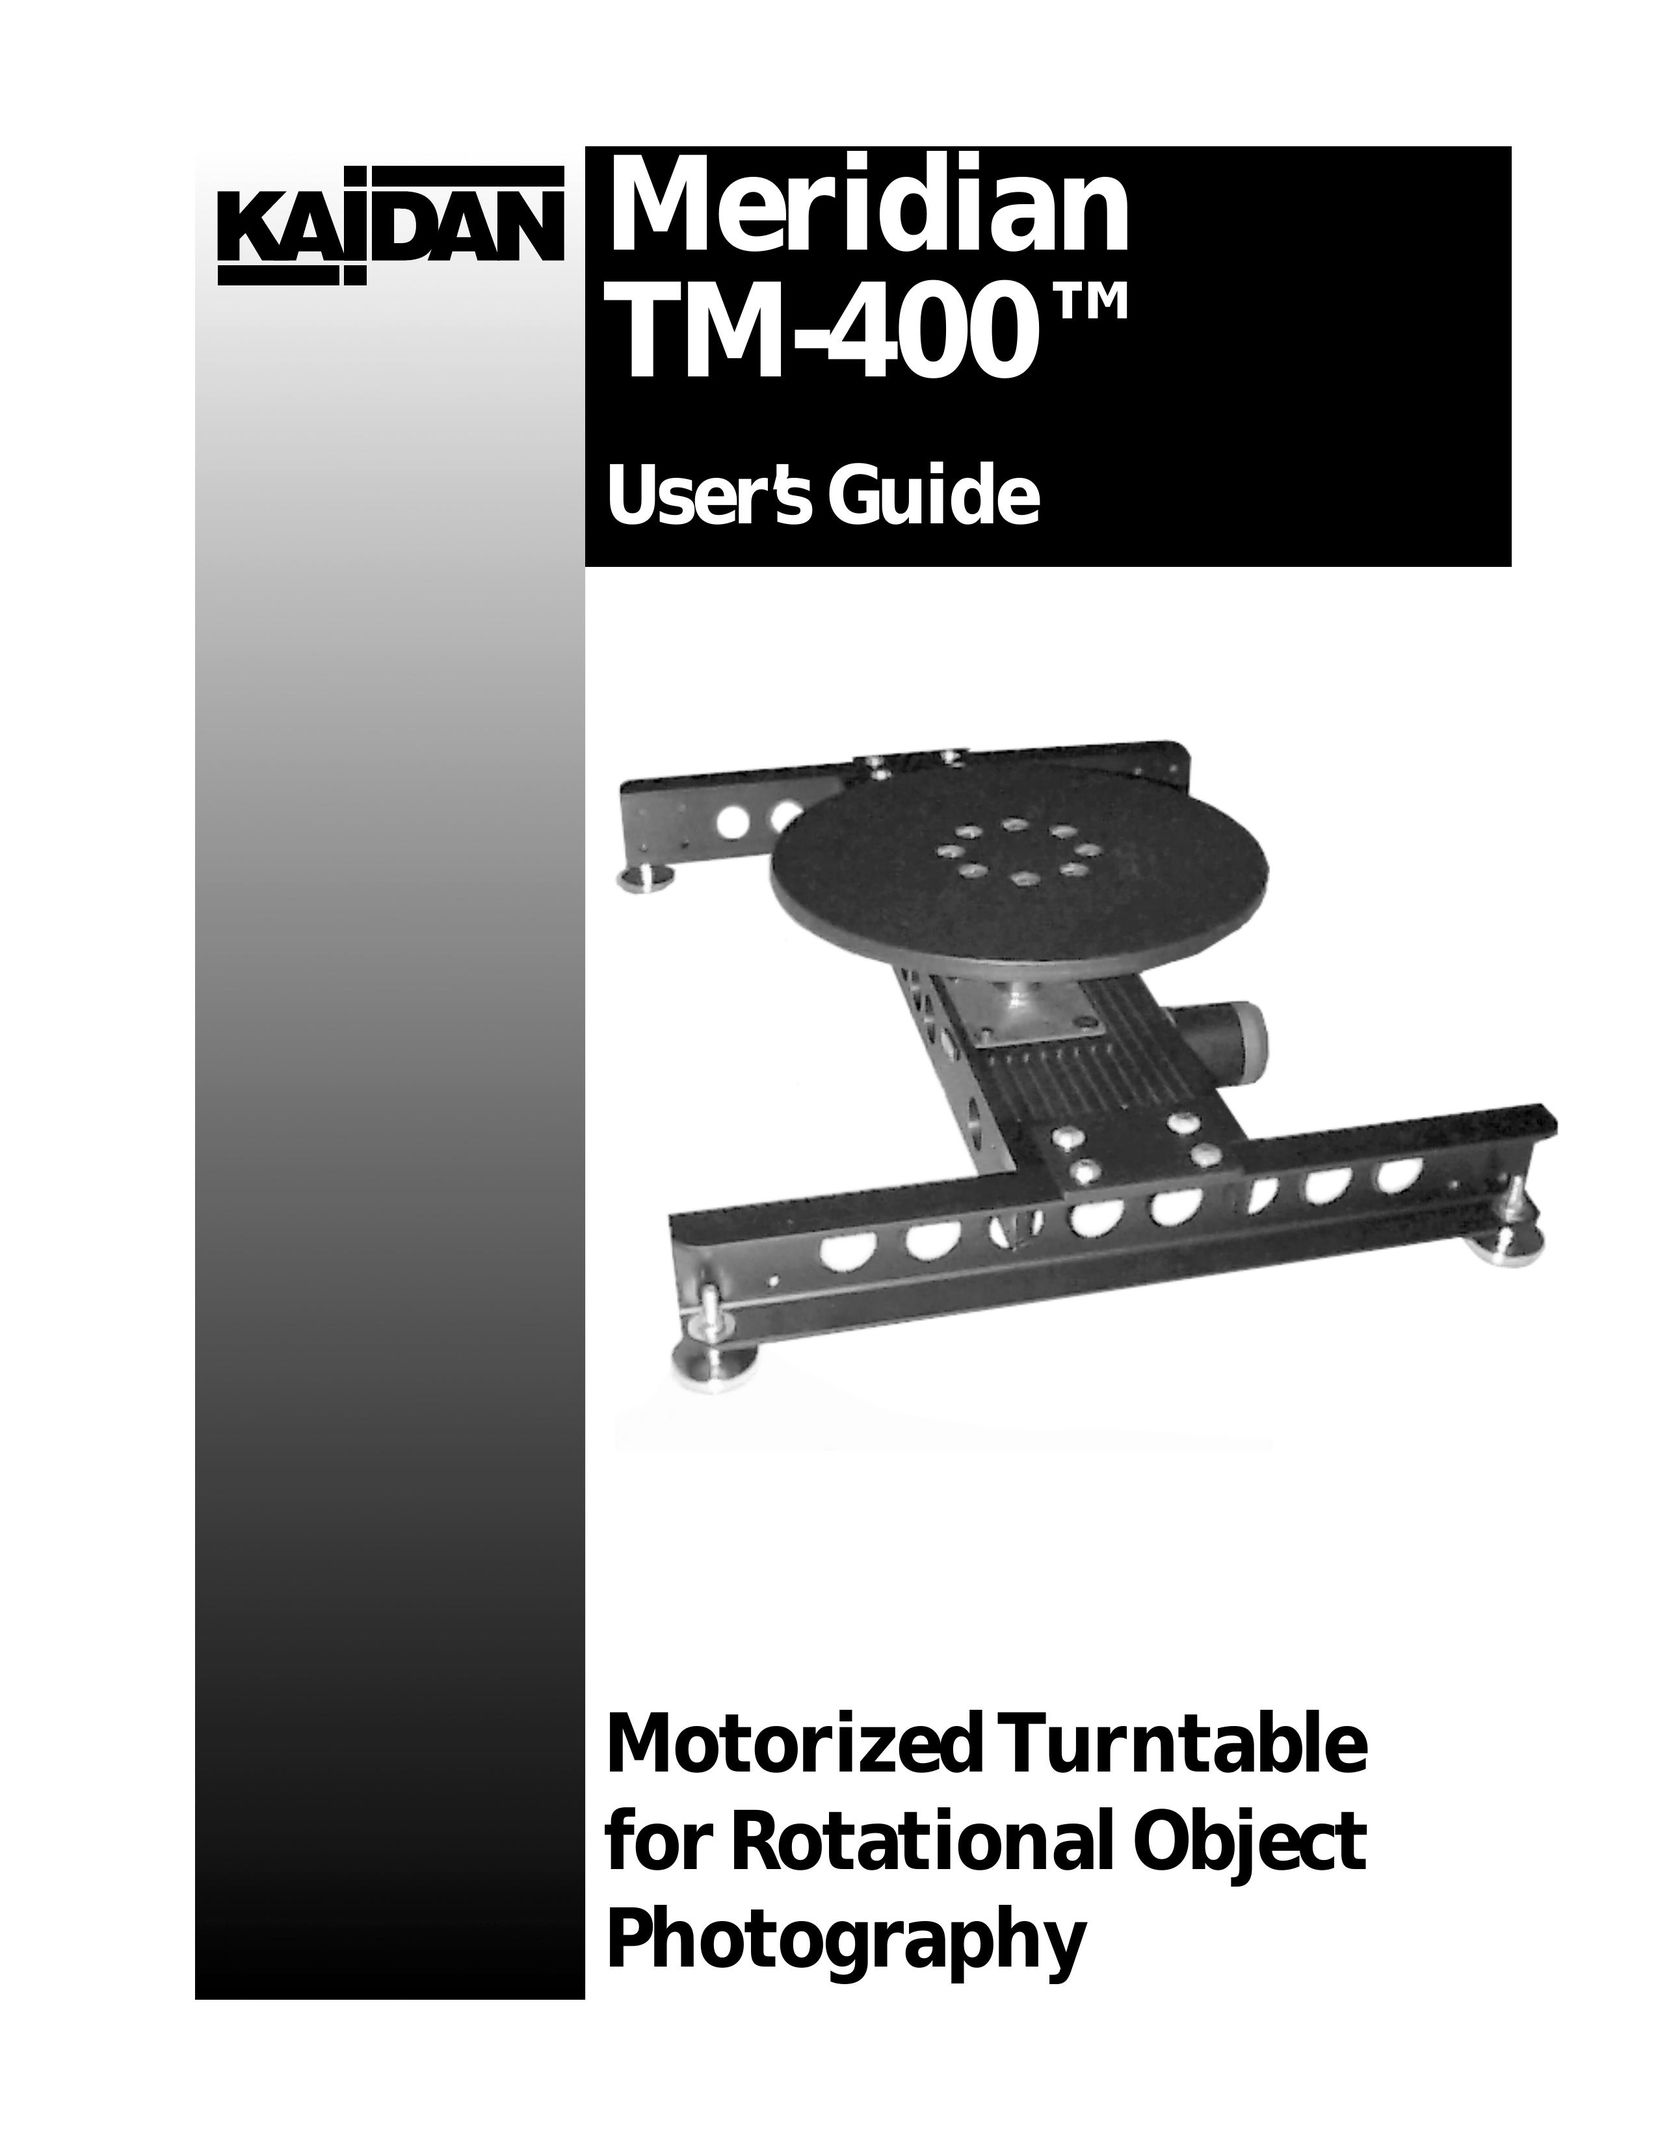 Kaidan TM-400 Turntable User Manual